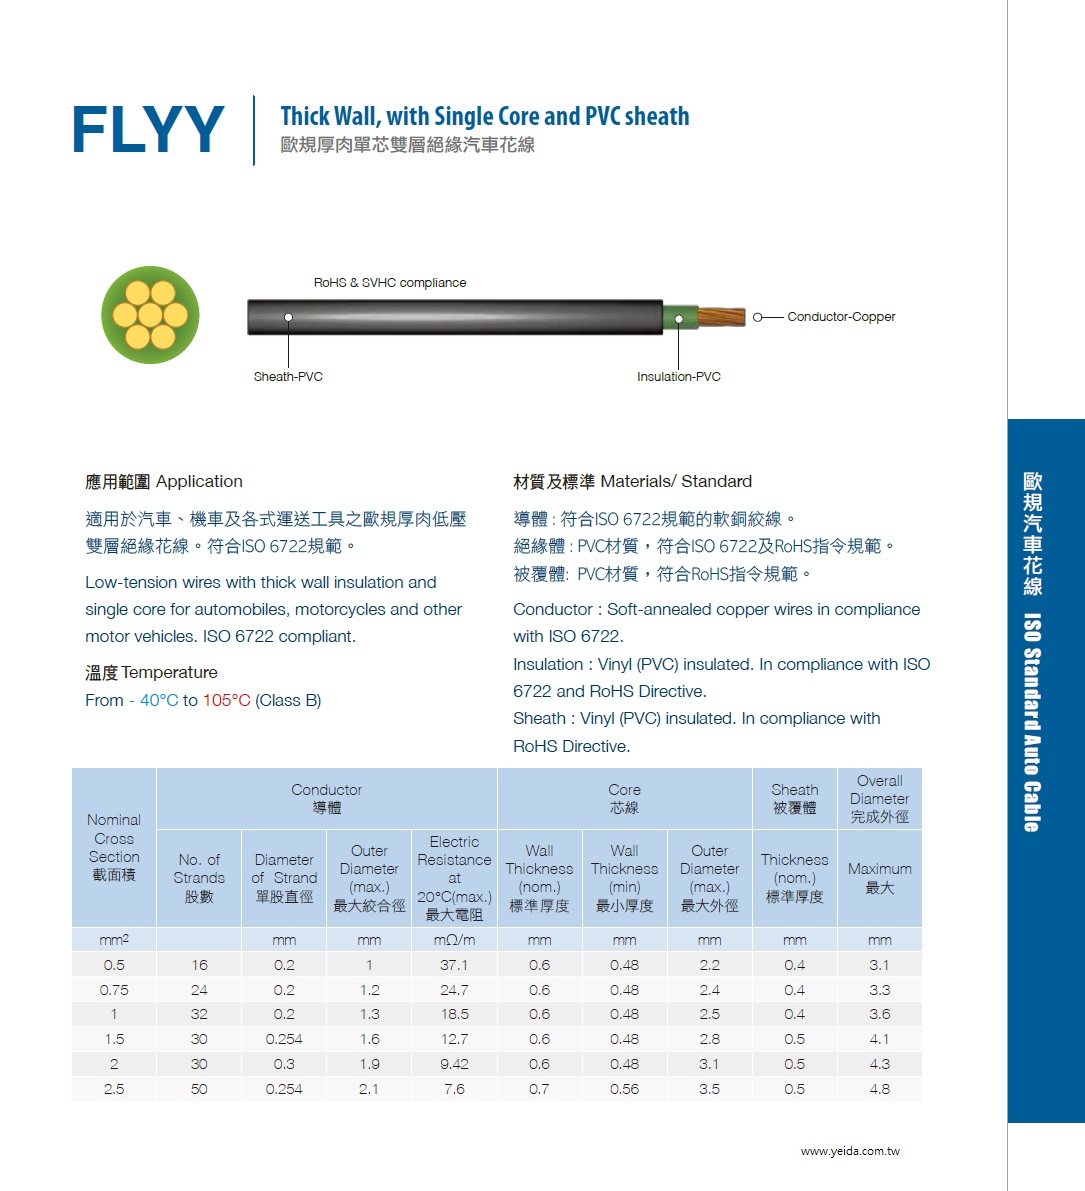 FLYY Thick Wall, with Single Core and PVC sheath 符合ISO 6722及  RoHS指令規範。歐規厚肉單芯雙層絕緣汽車花線